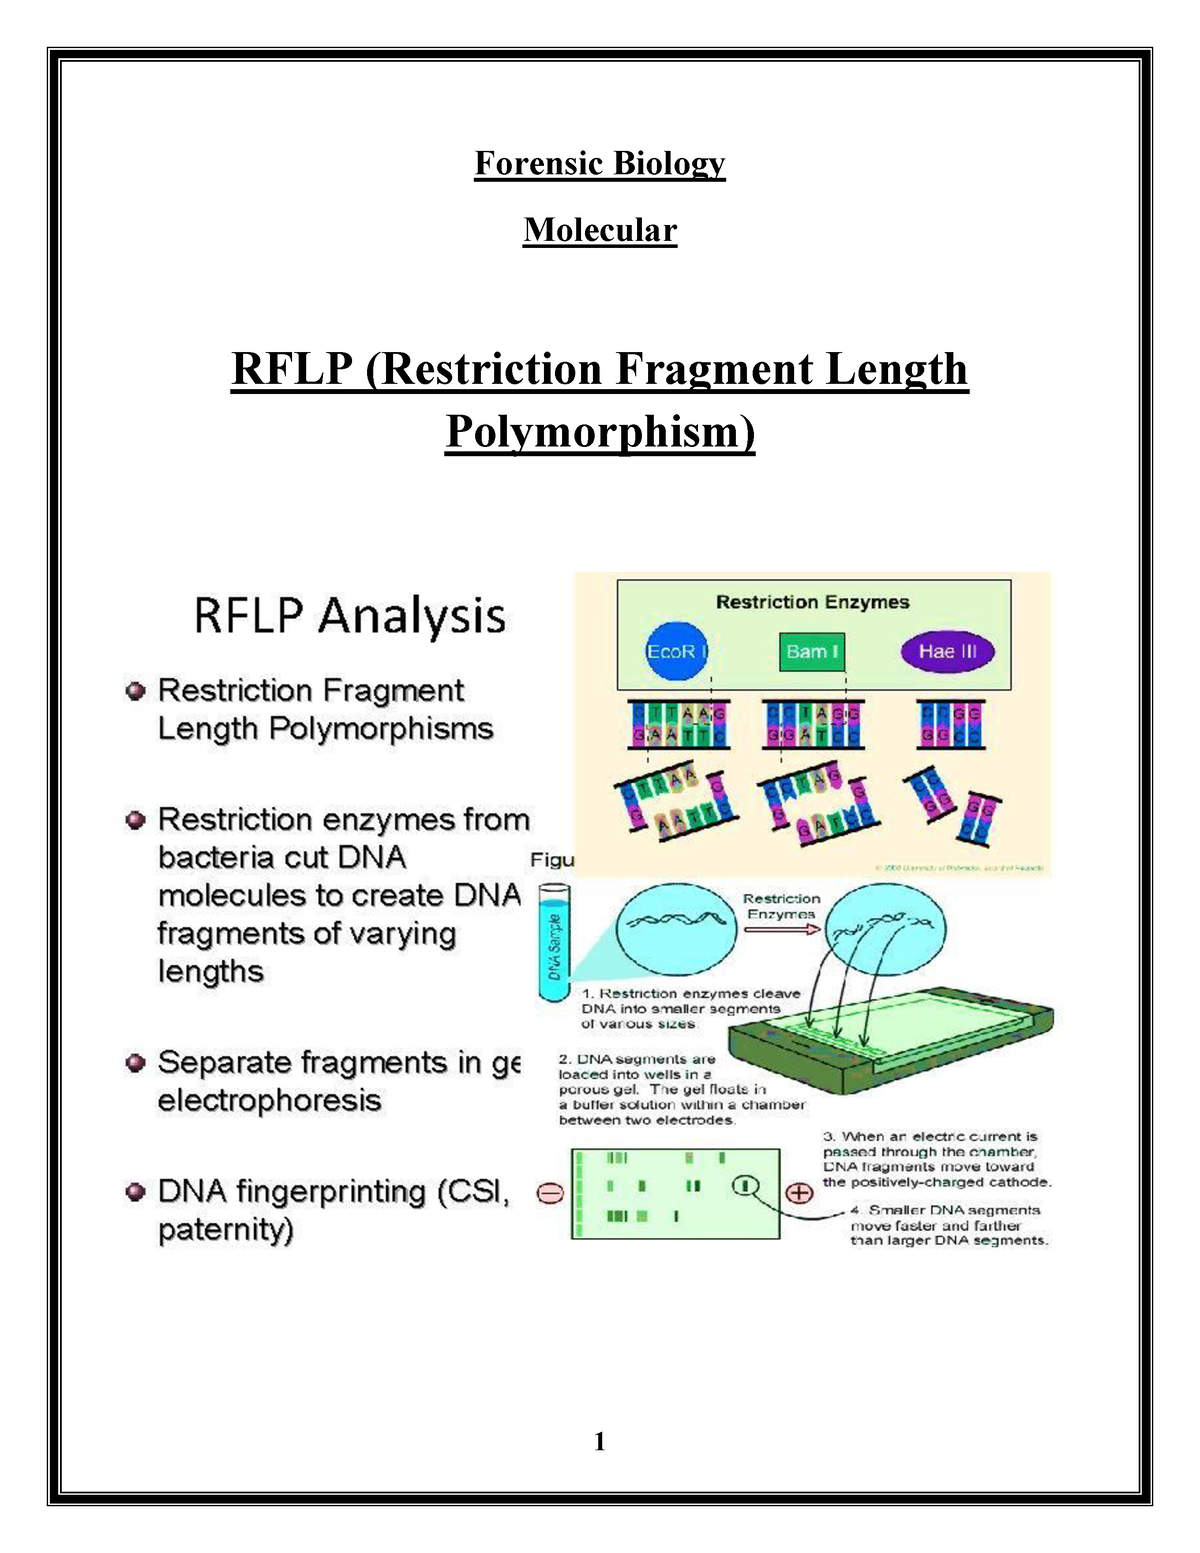 restriction fragment length polymorphism